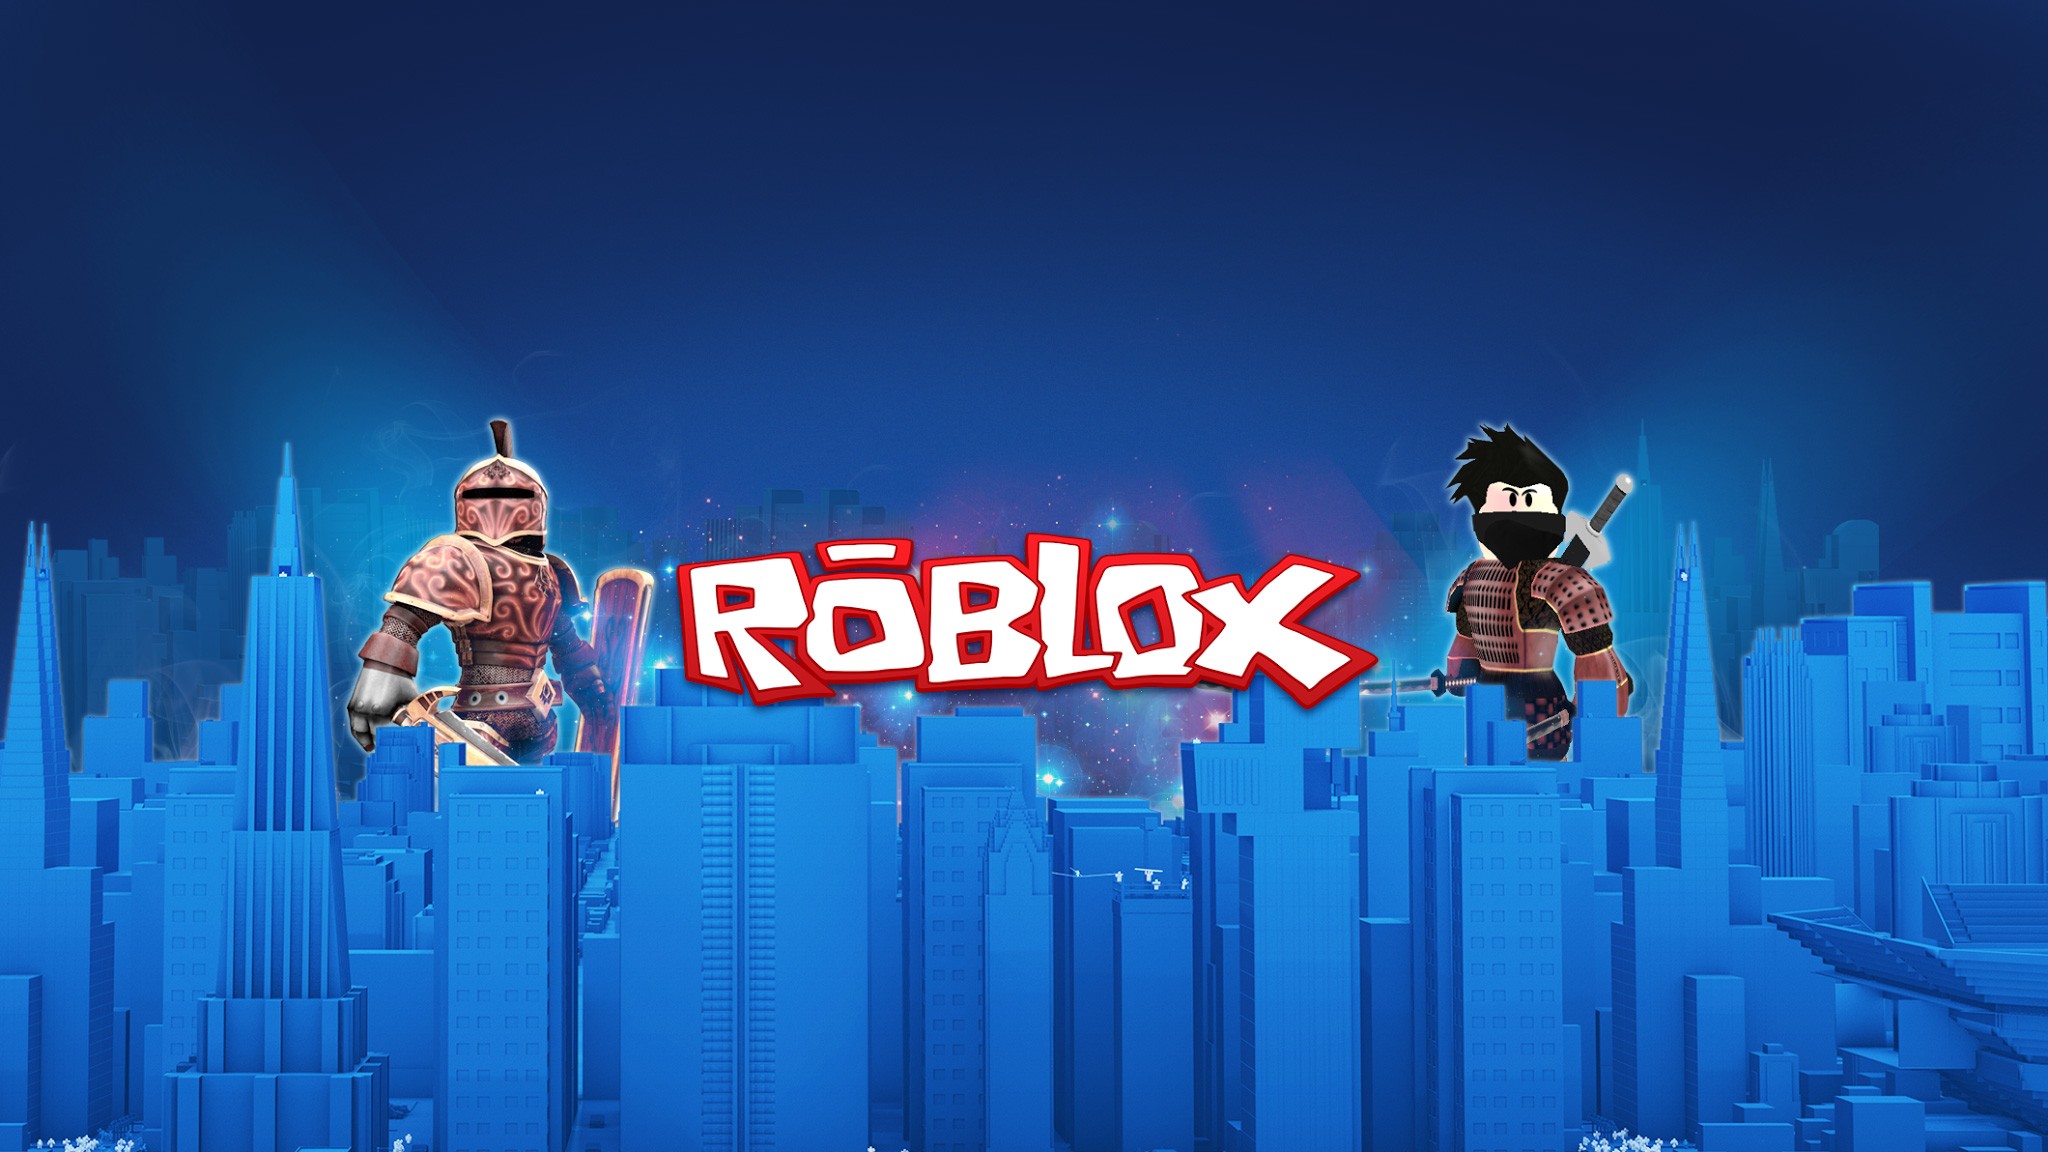 Roblox Background Download Free Beautiful Hd Backgrounds For - galaxy stylish roblox background